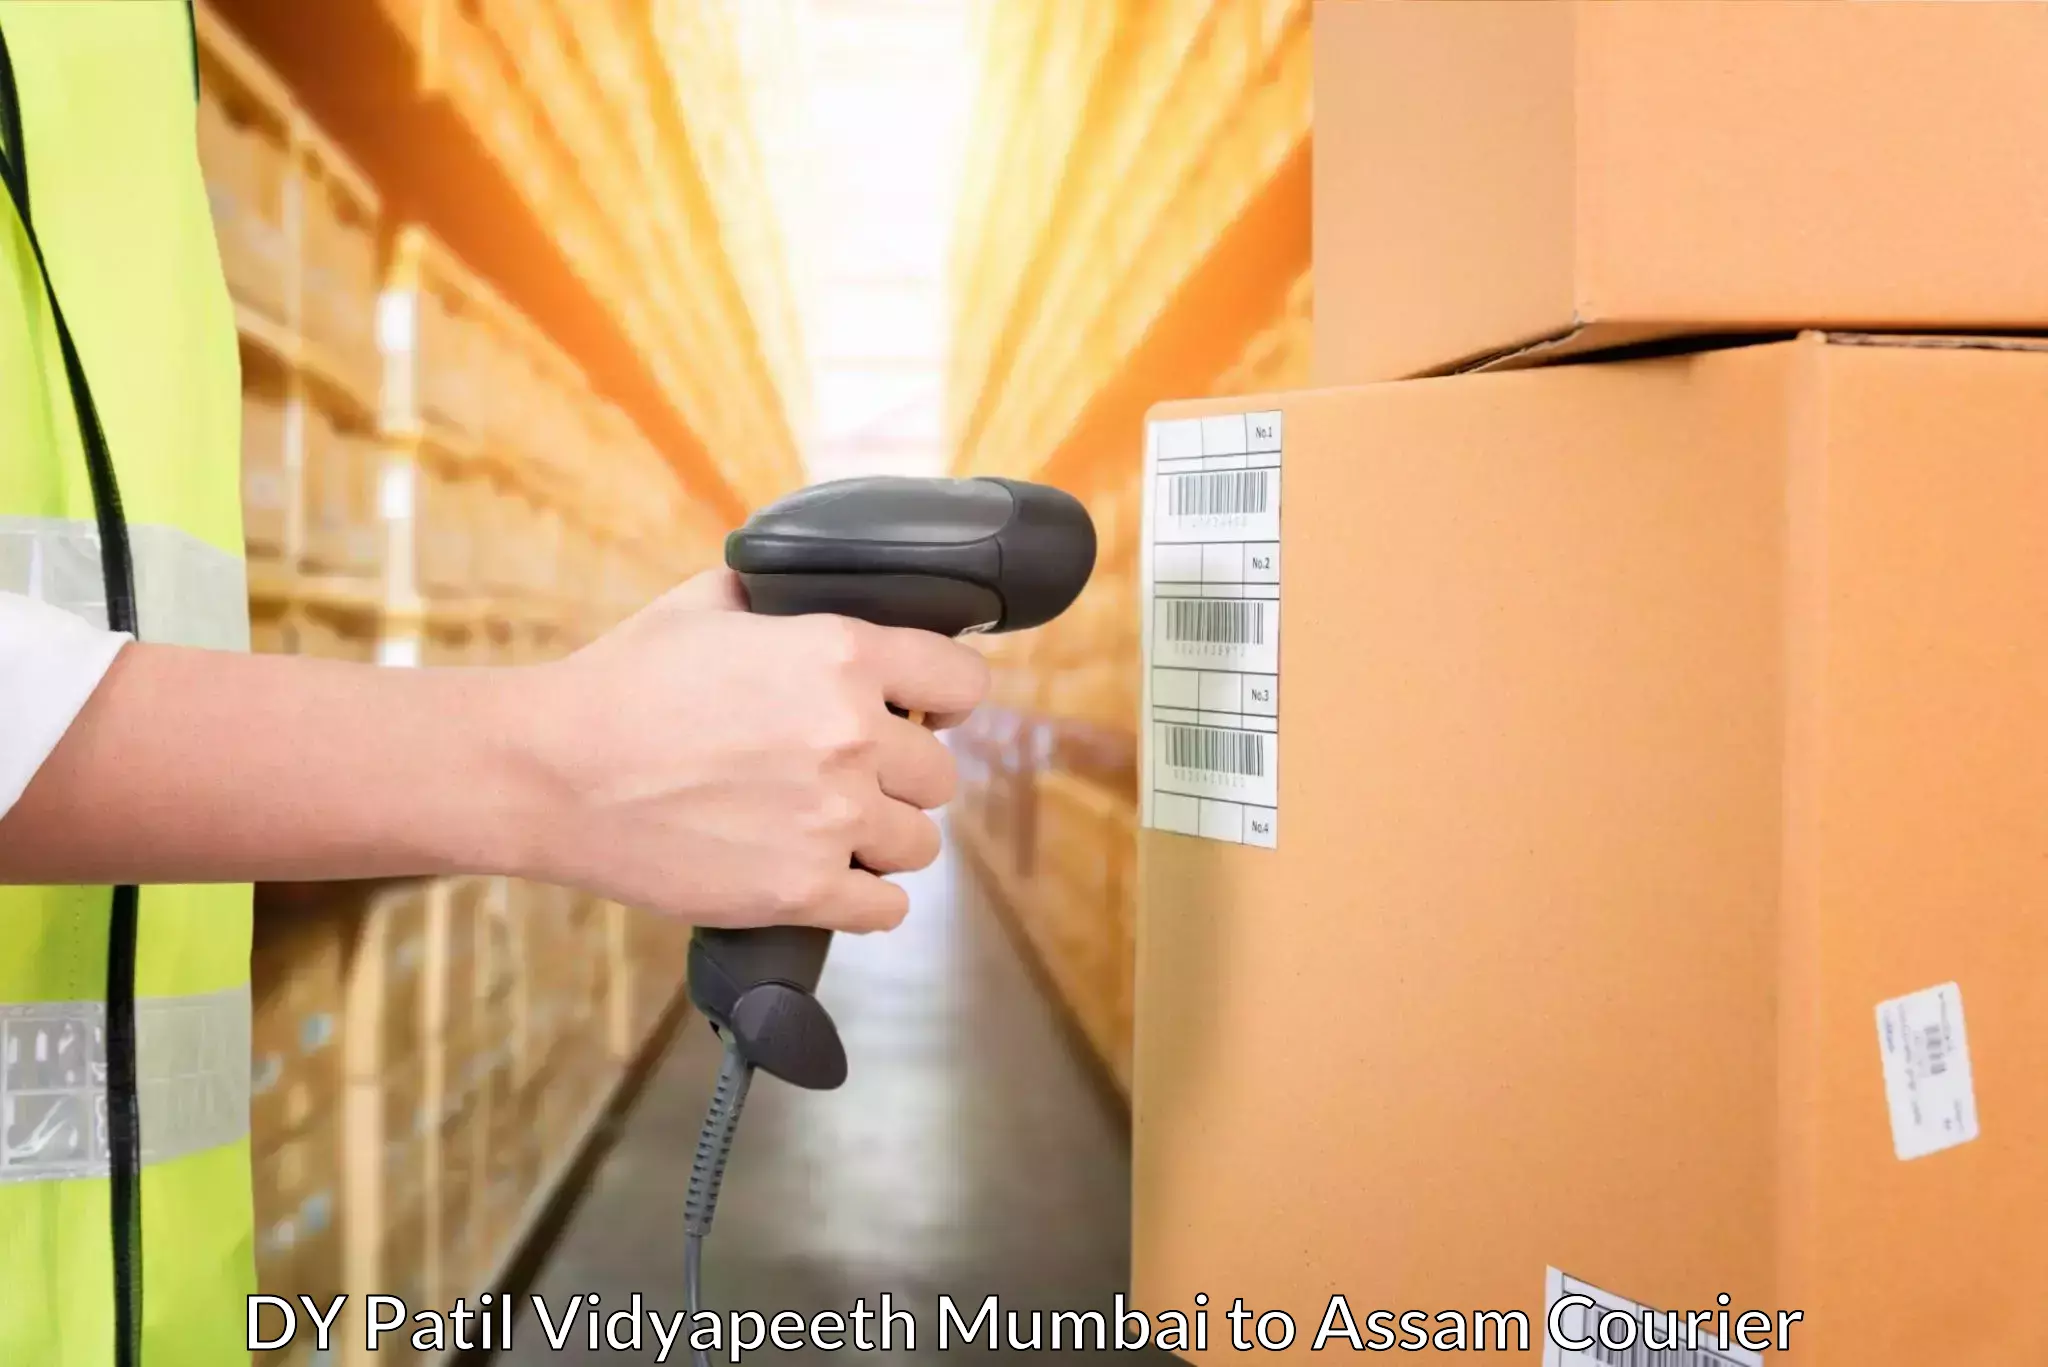 Global logistics network DY Patil Vidyapeeth Mumbai to Kalgachia